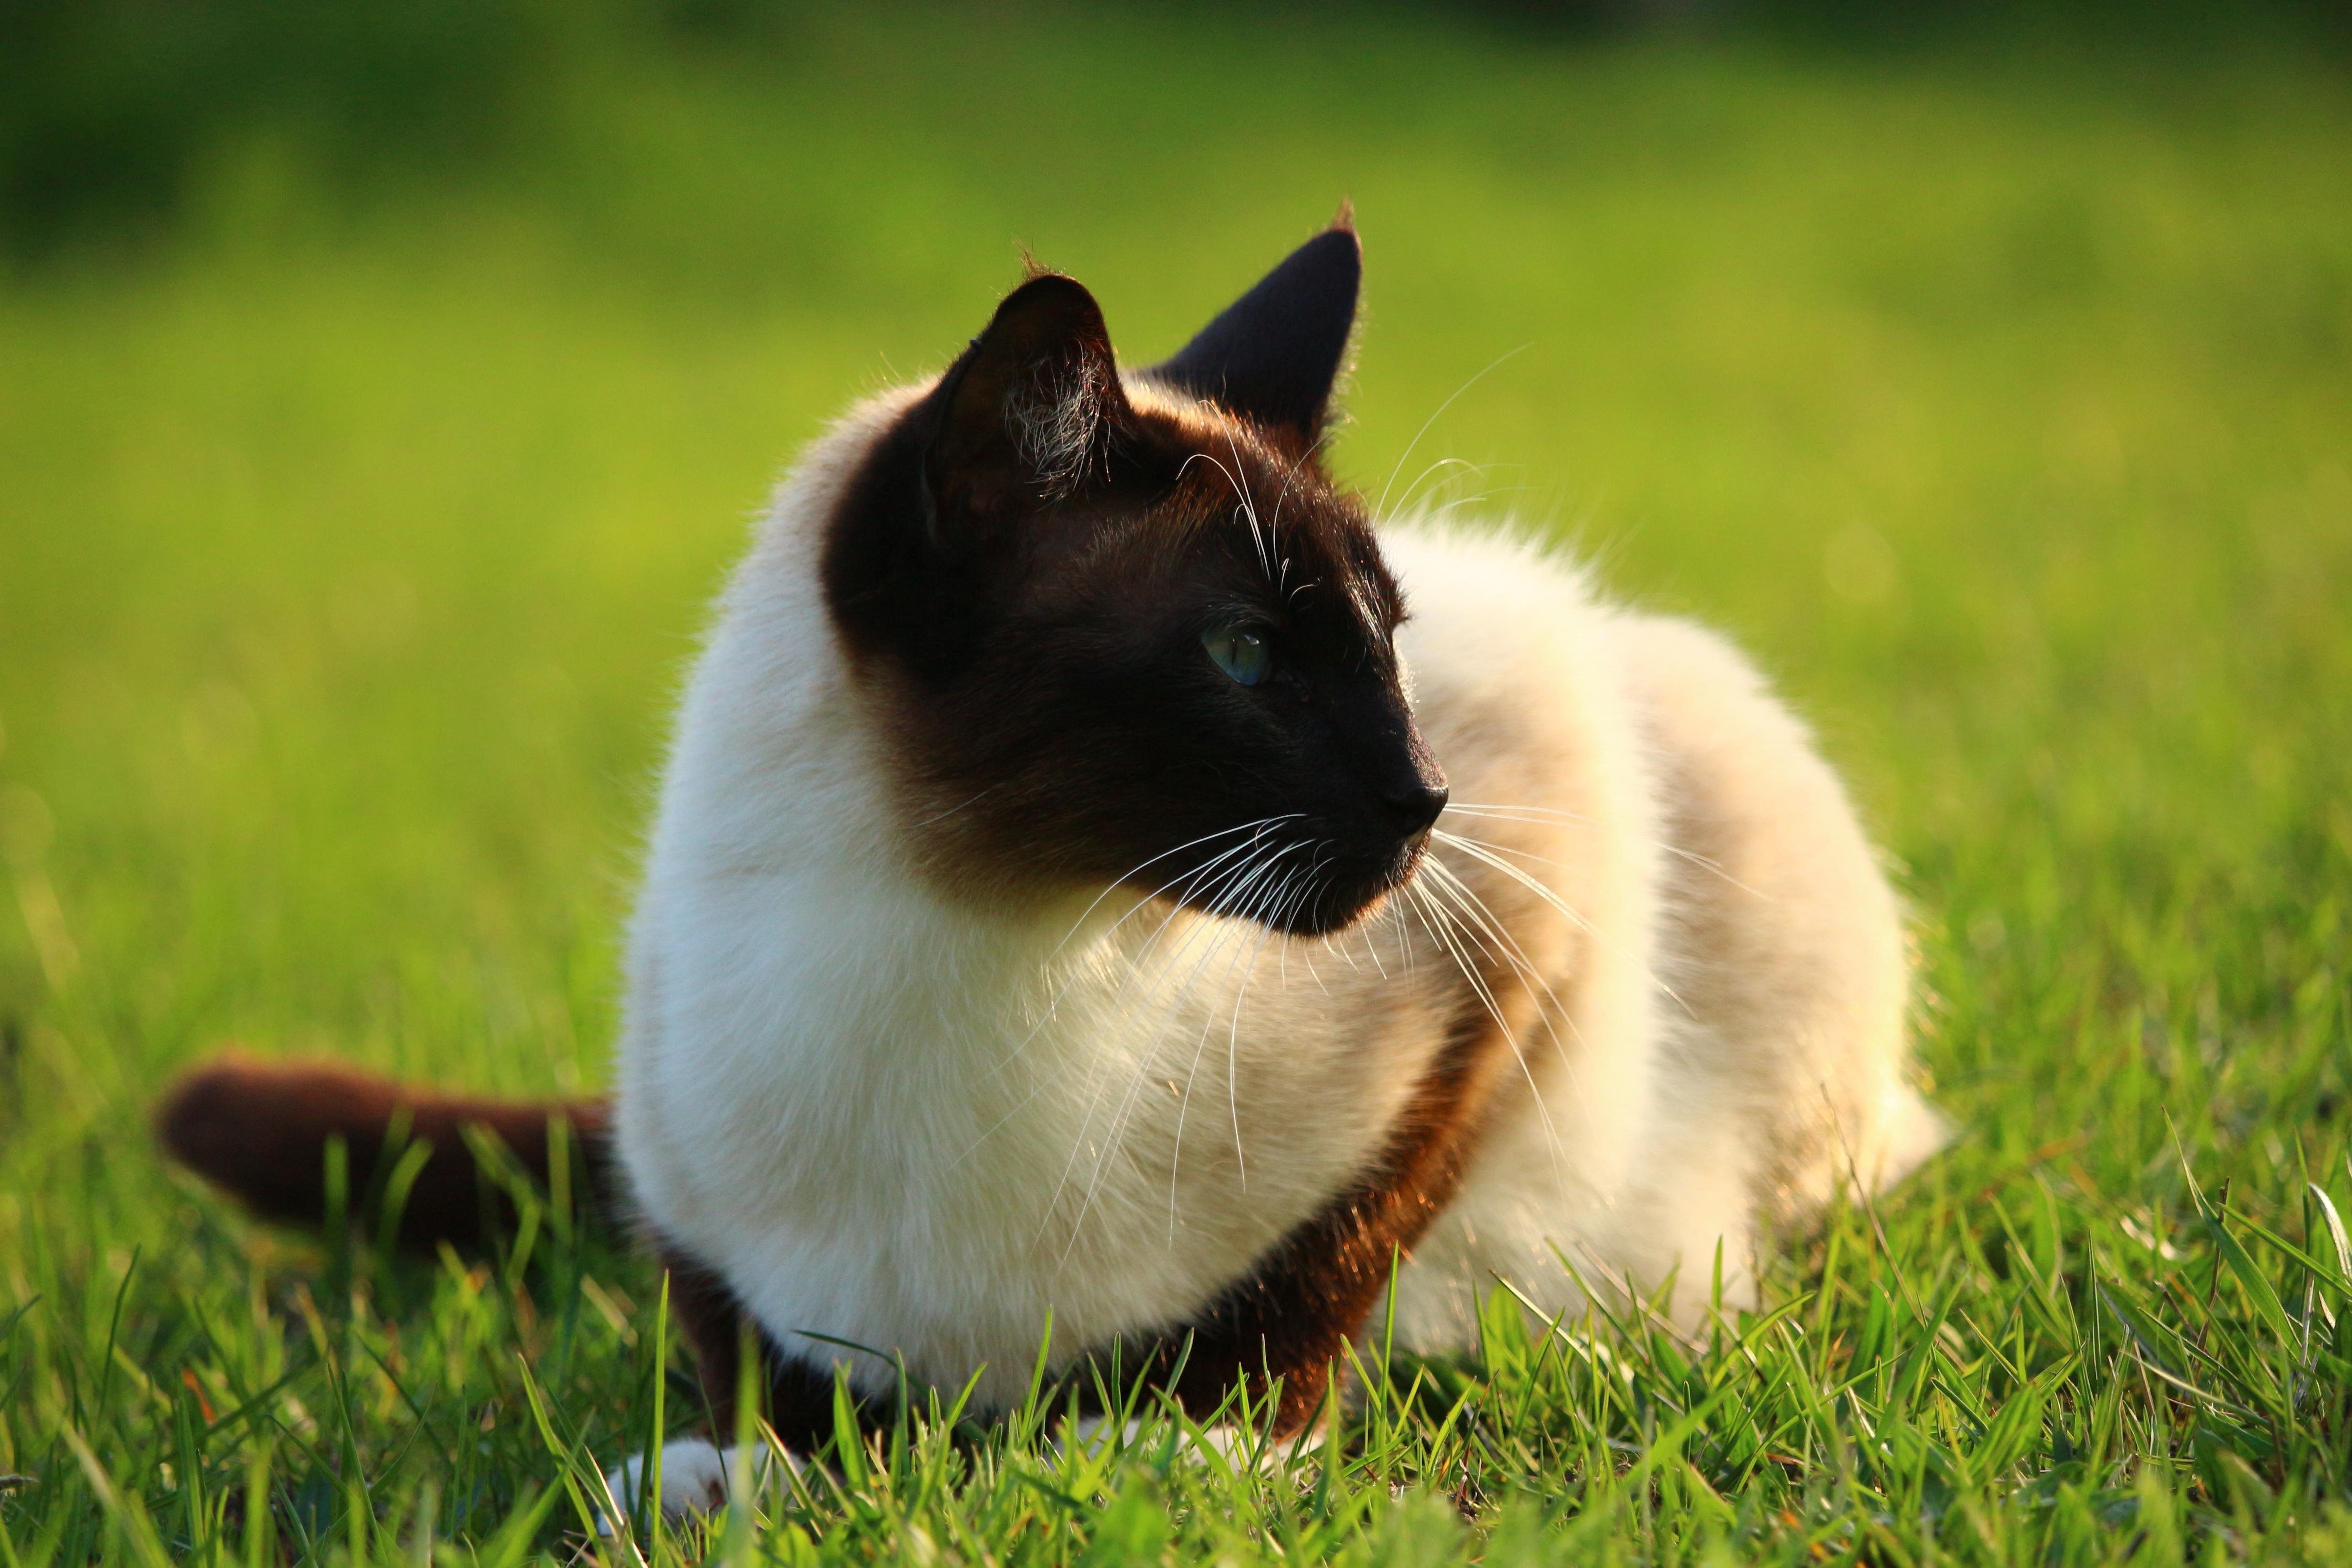 Free picture: grass, siamese cat, spring, animal, cat, cute, feline, pet